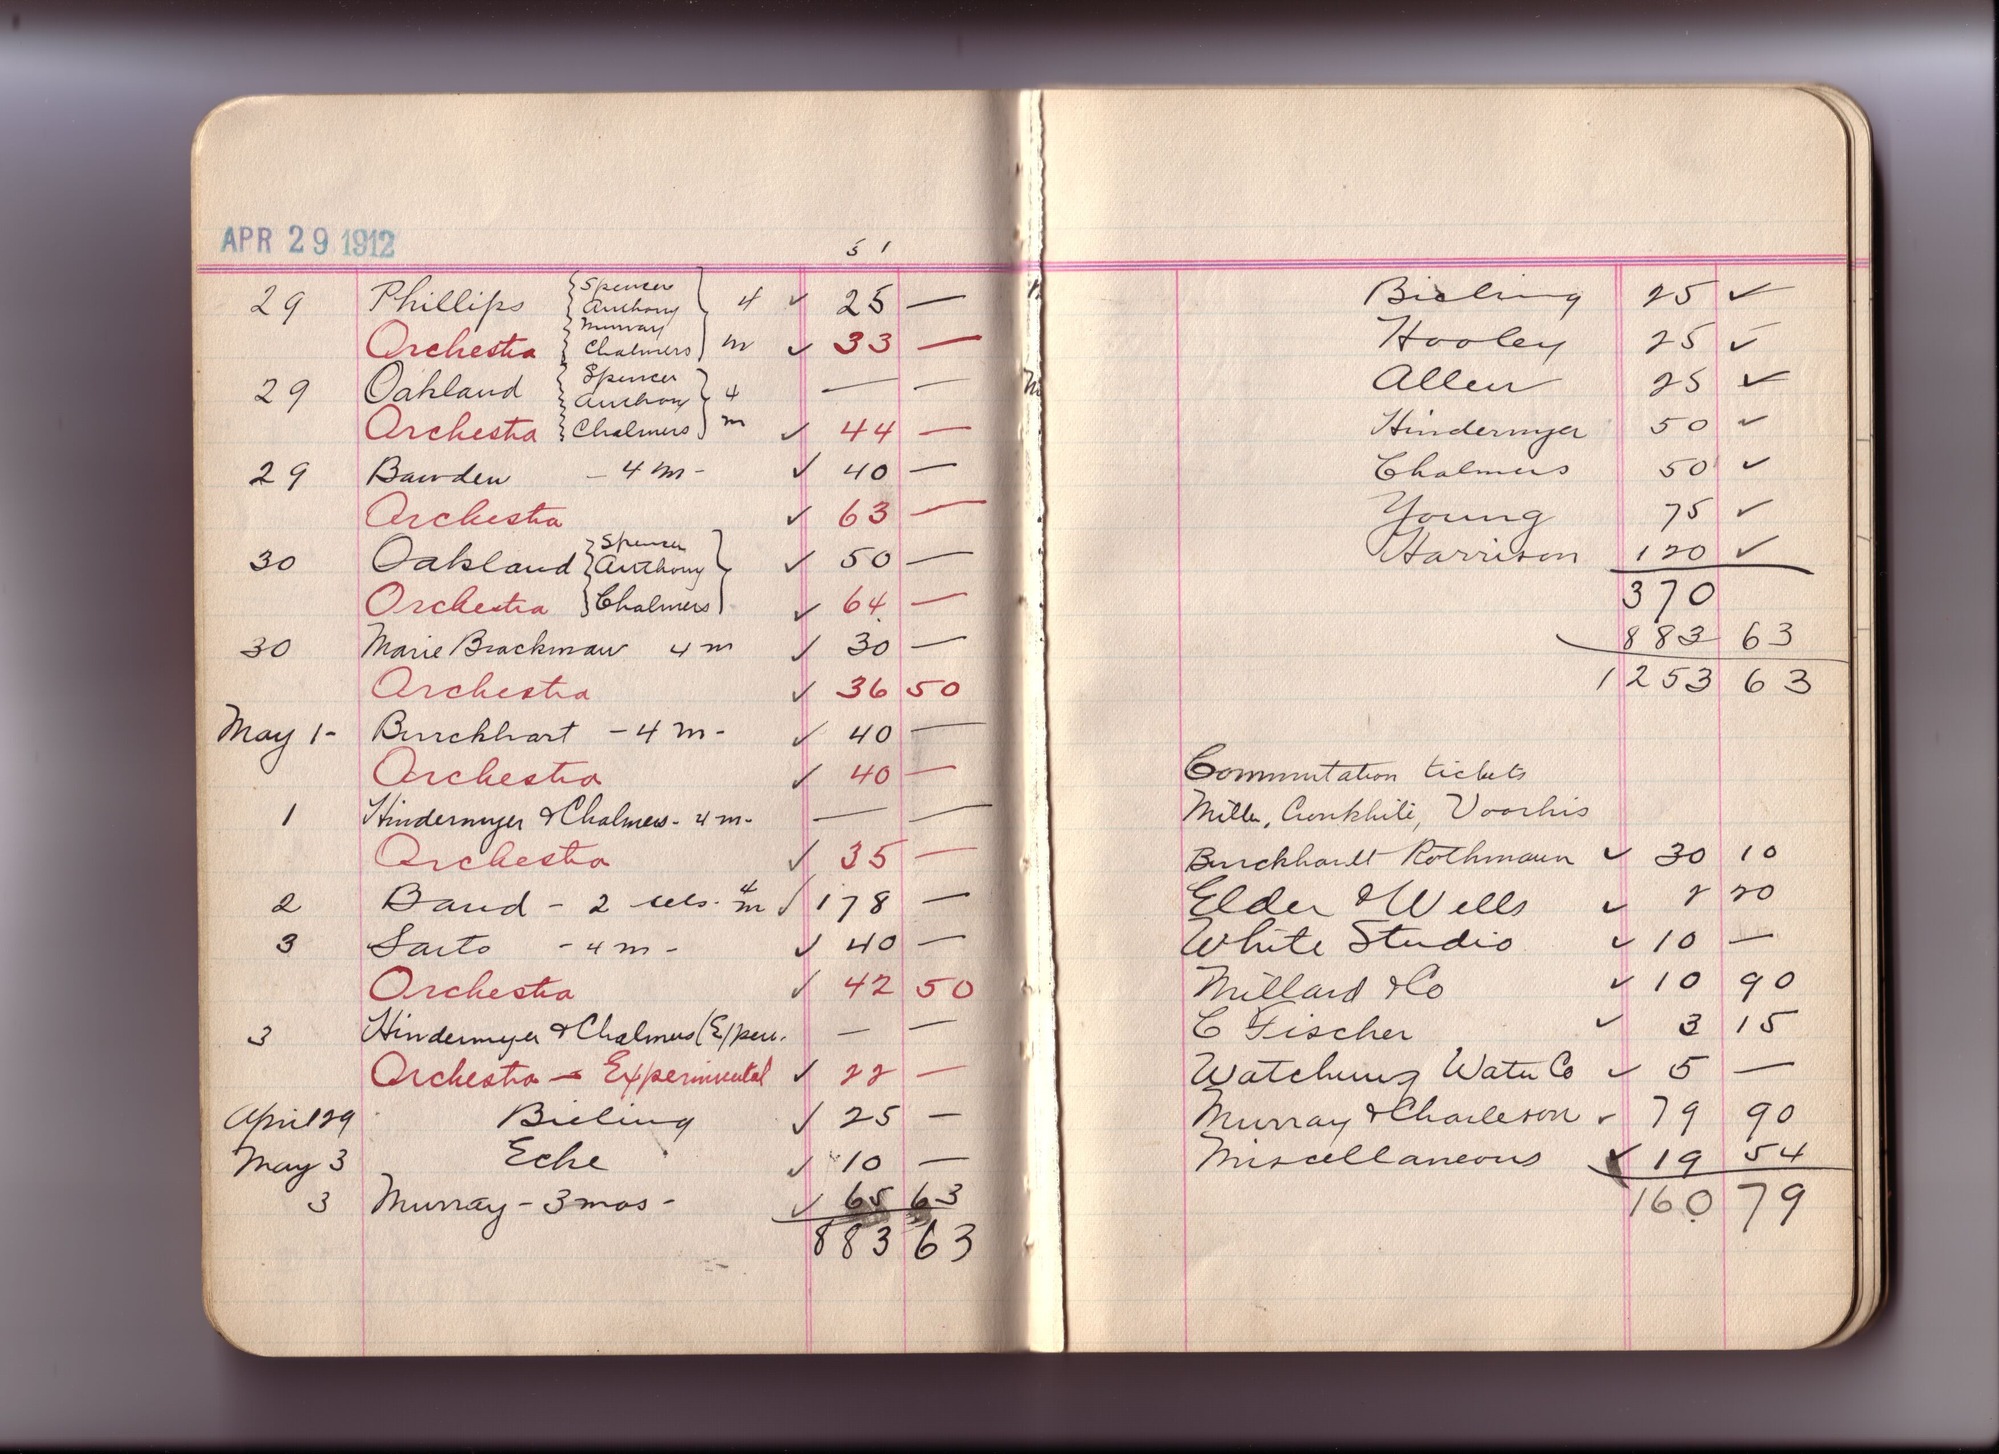 Thomas Edison's New York City Recording Studio Cash Book 09 (of 21), Image 07 (of 48).